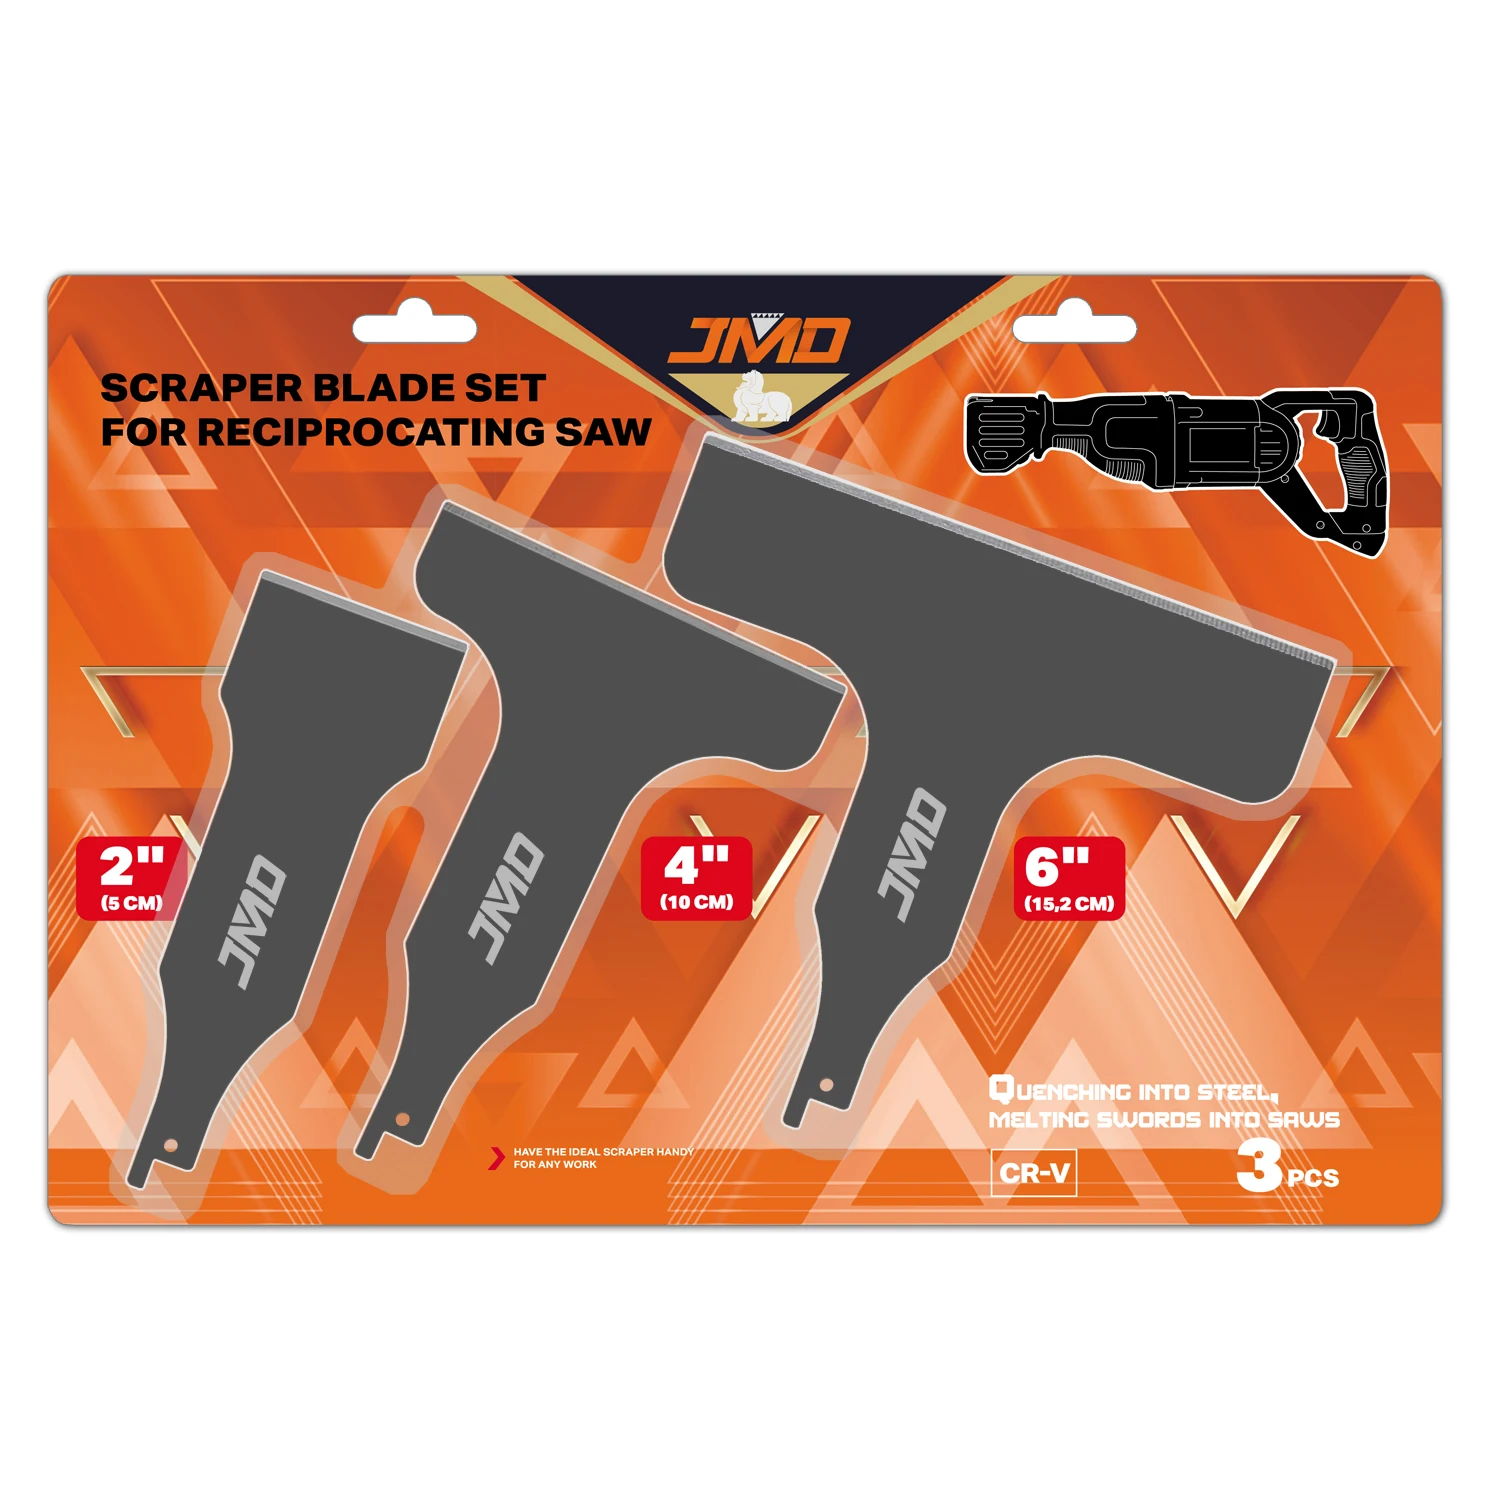 JMD Reciprocating Saw Blade Customized HCS Multifunctional Universal Reciprocating Saw Scraper Blade